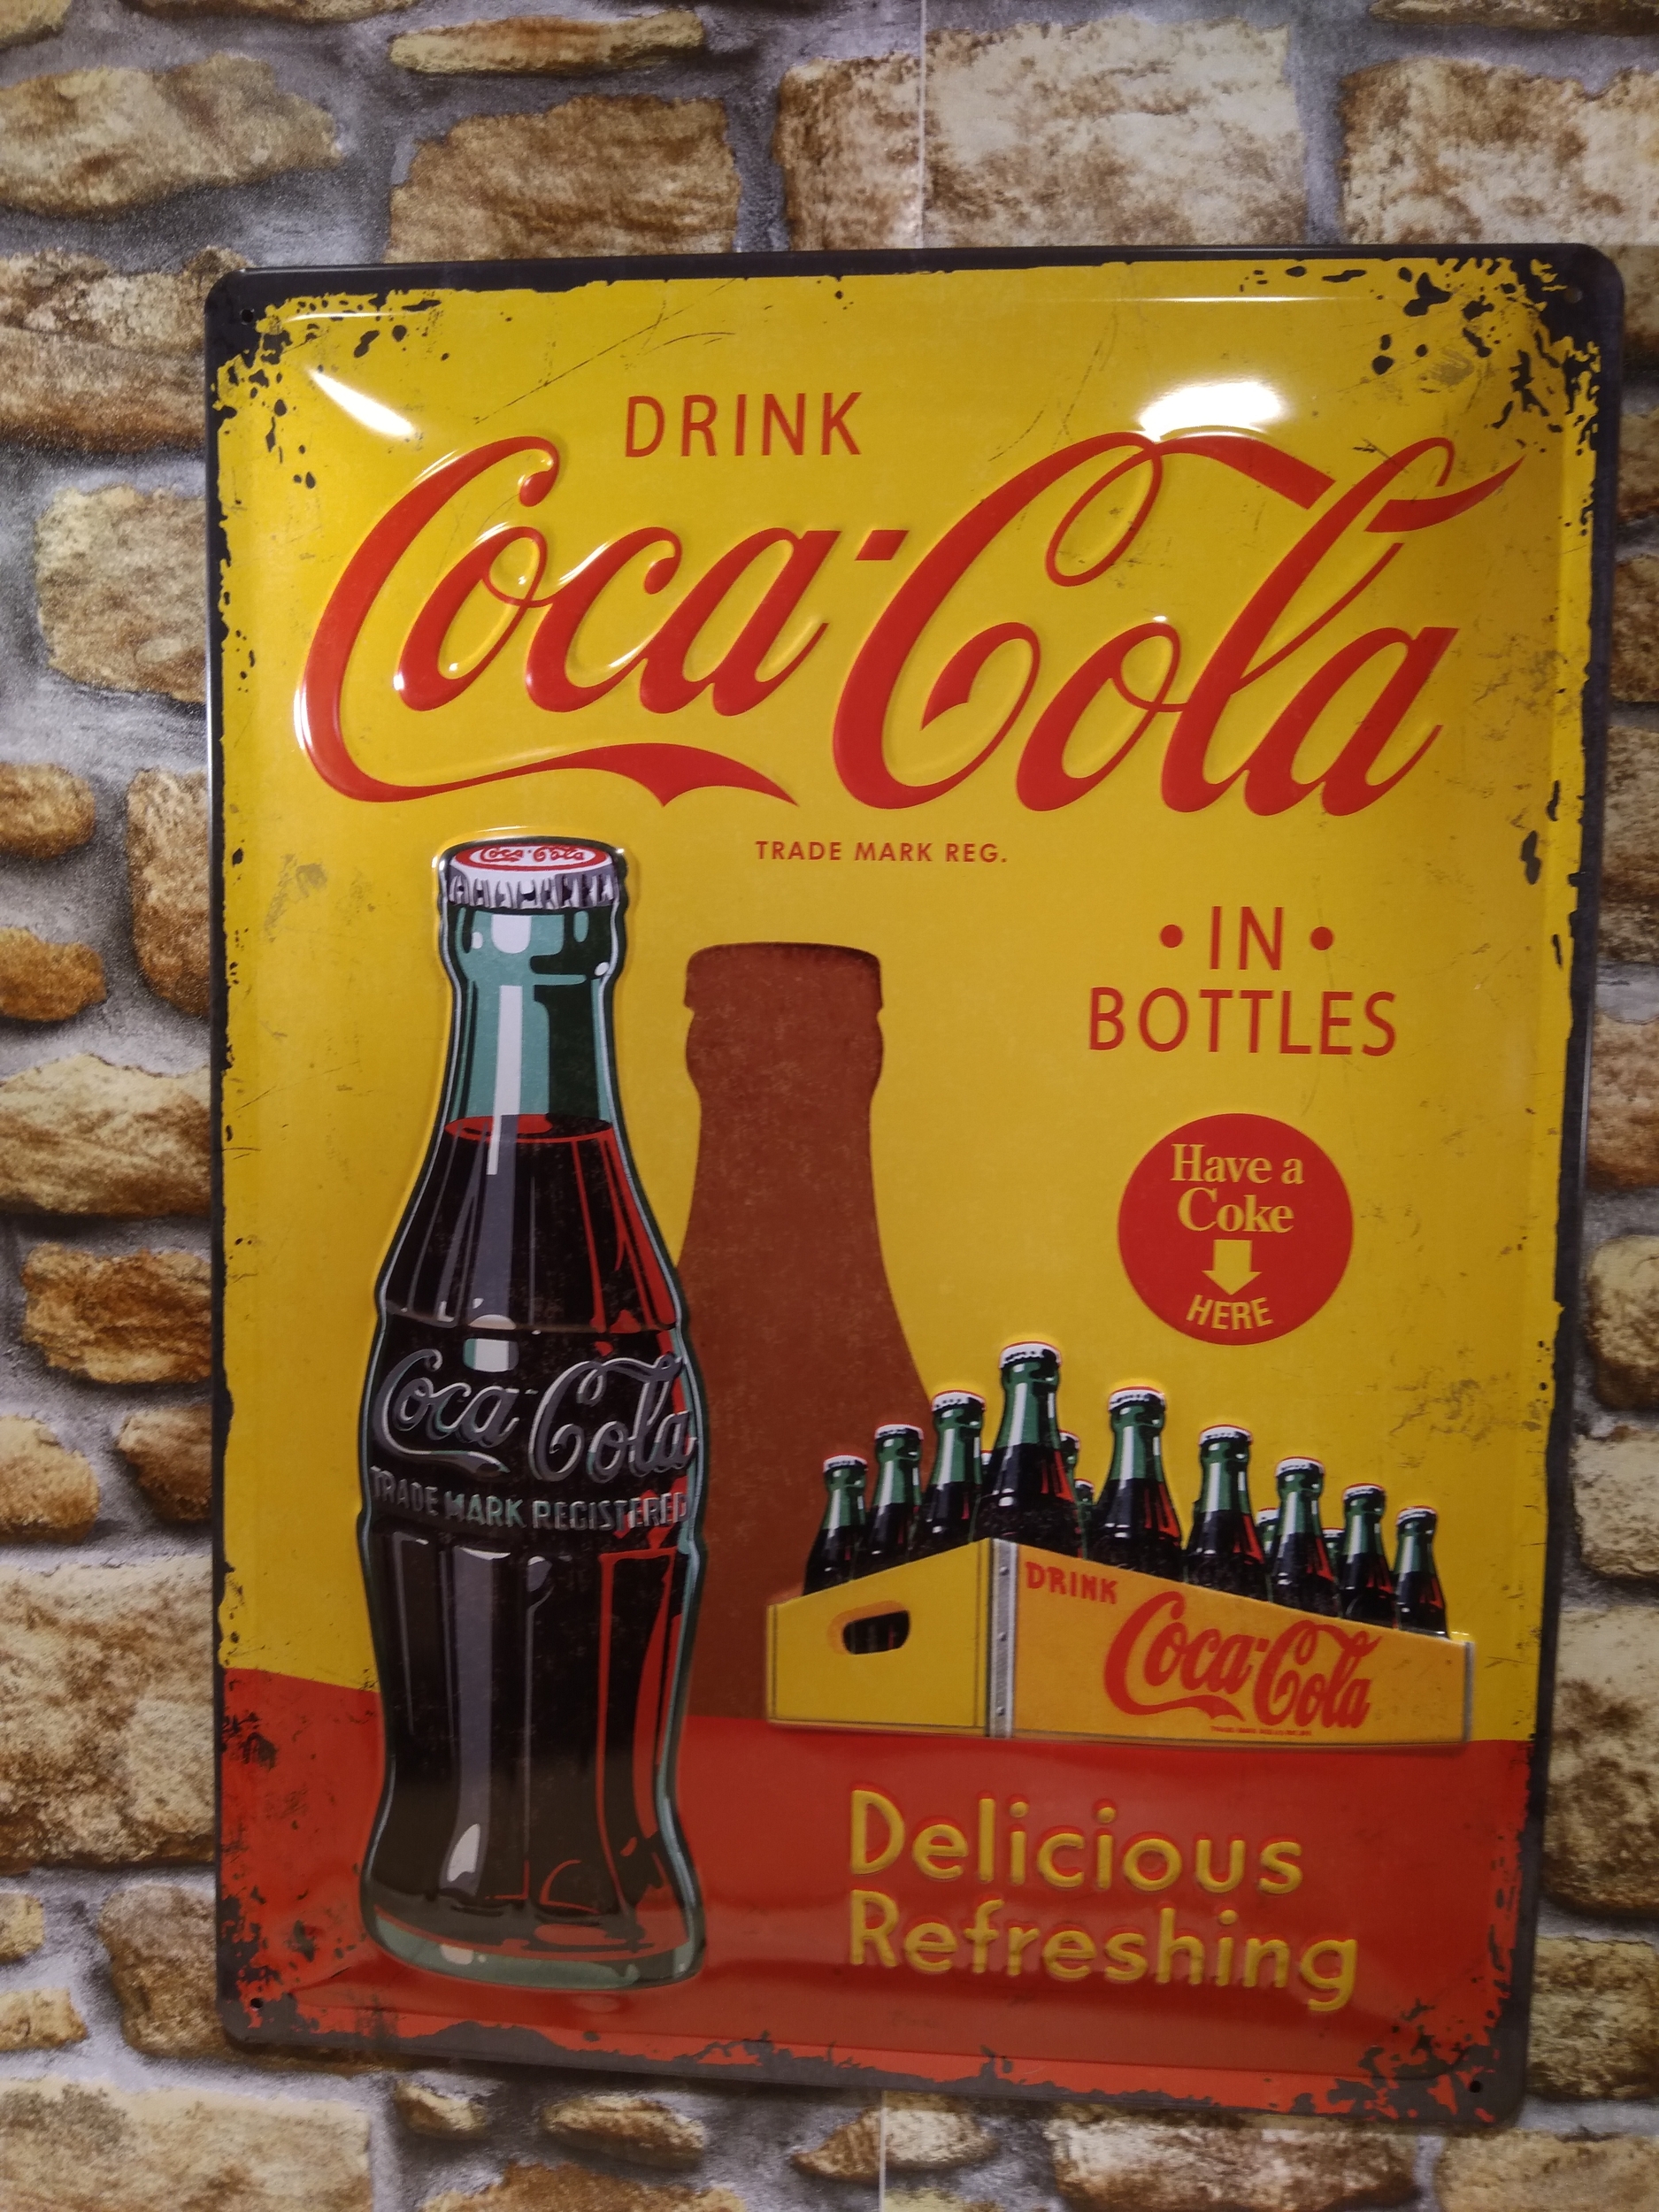 plaque publicitaire vintage coca cola